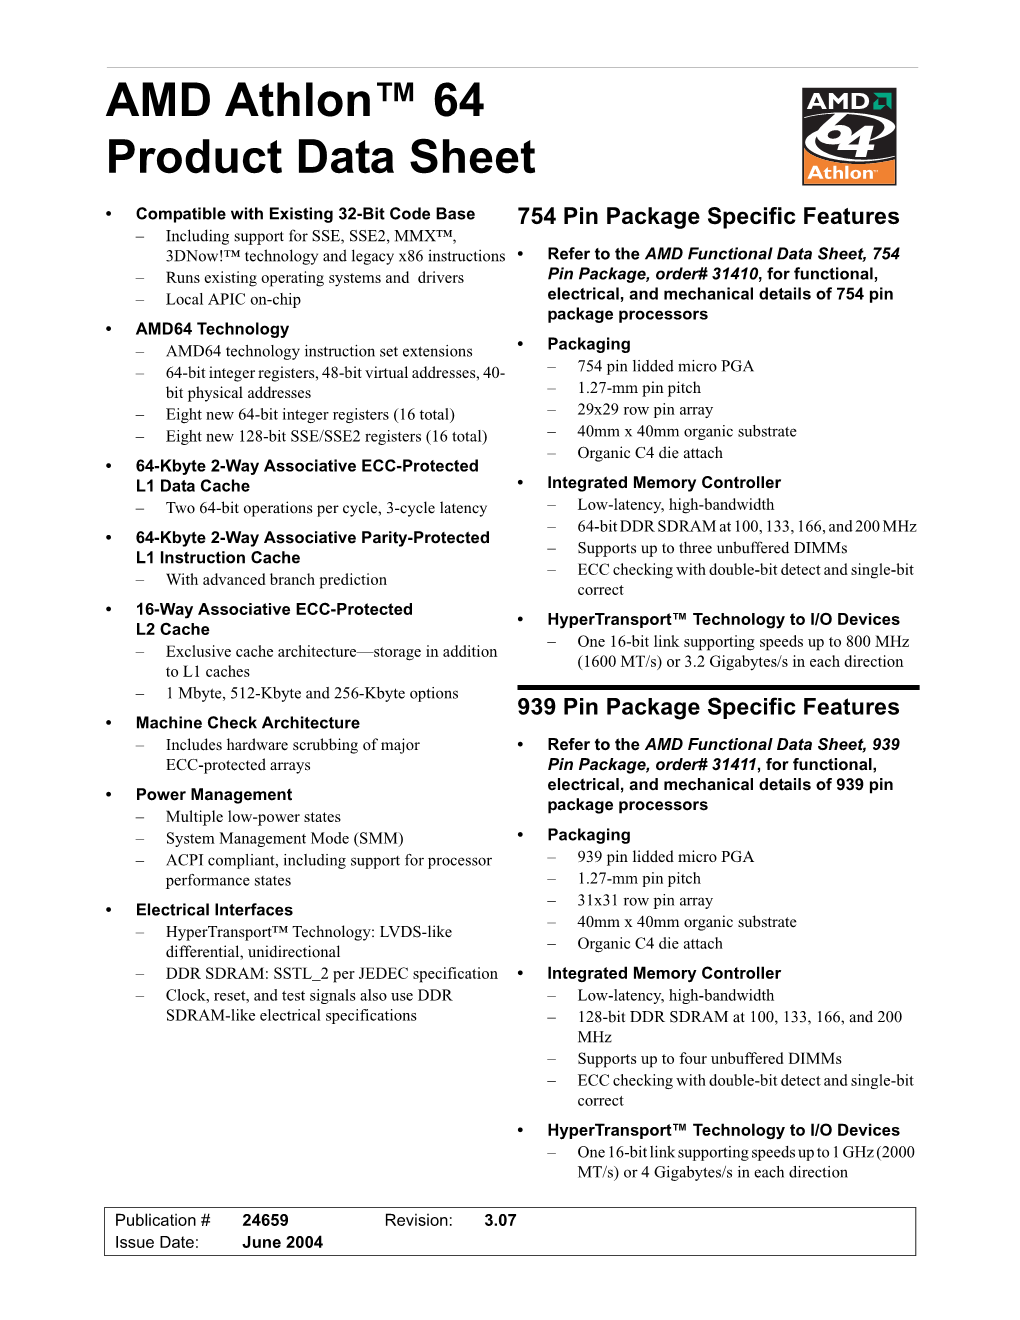 AMD Athlon 64 Product Data Sheet